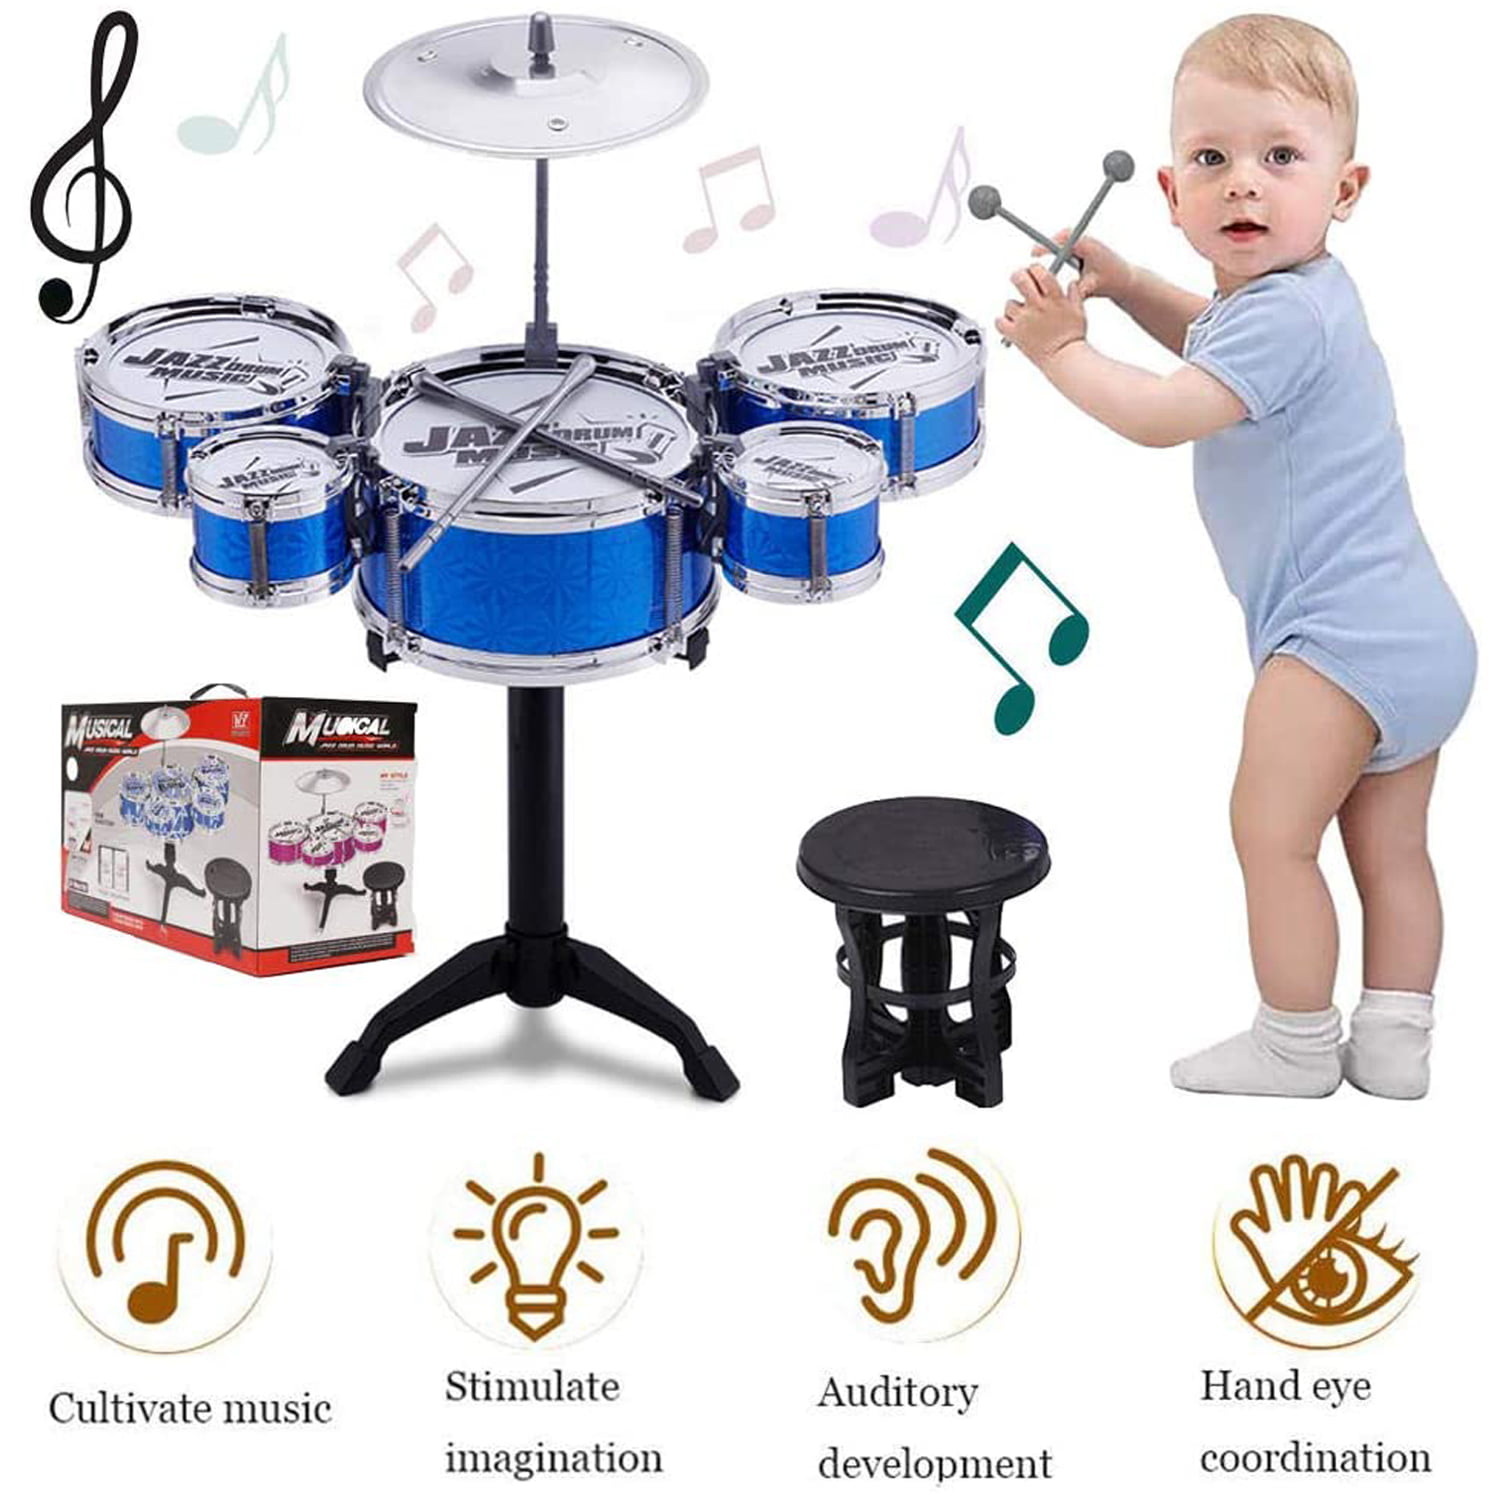 Kids Desk Top Drum Kit Miniature Musical Instrument Fun Super Sound Toy Gift 